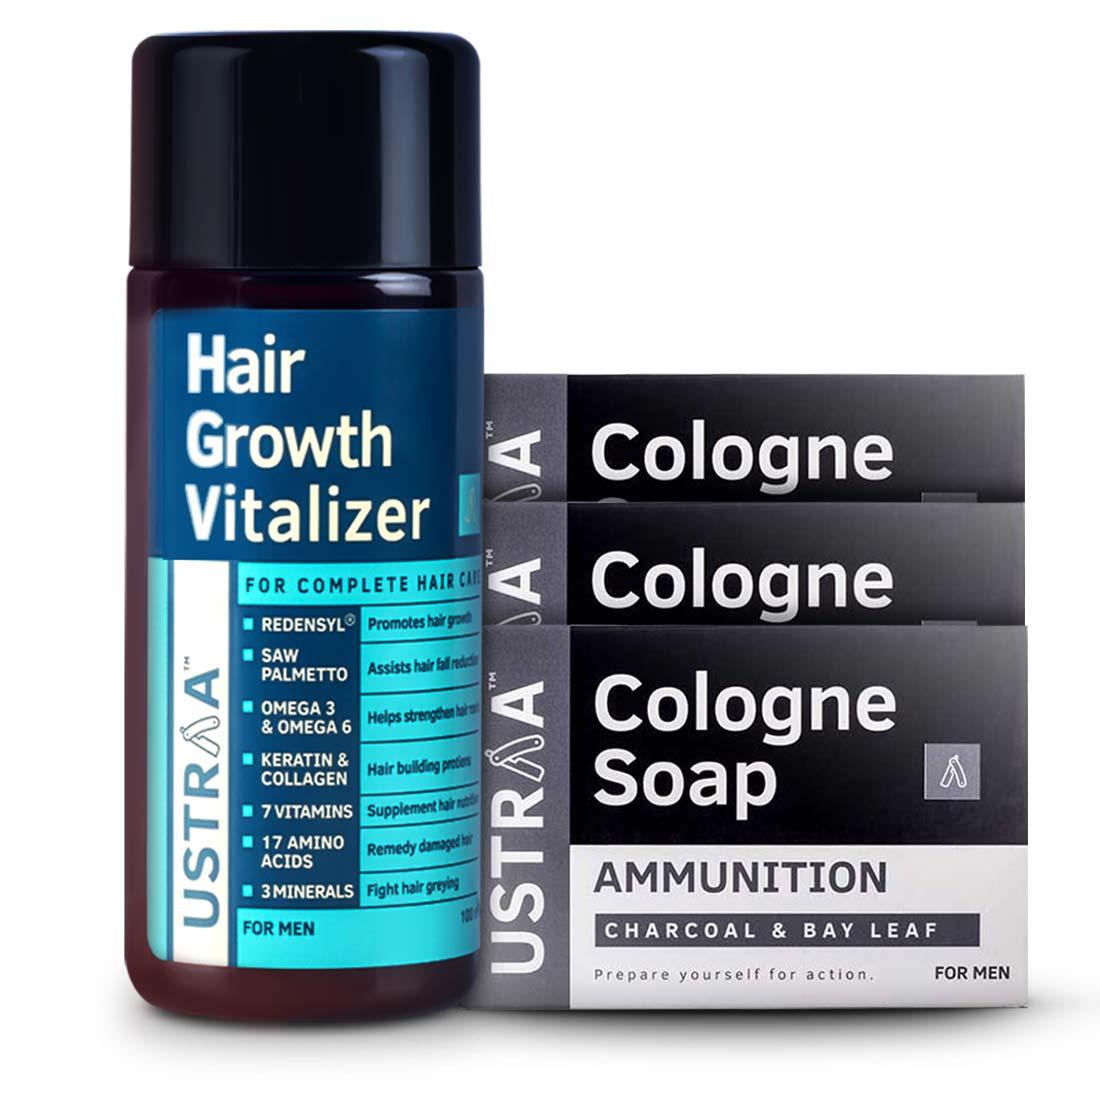 Hair Growth Vitalizer & Cologne Ammunition Soap (Set of 3)